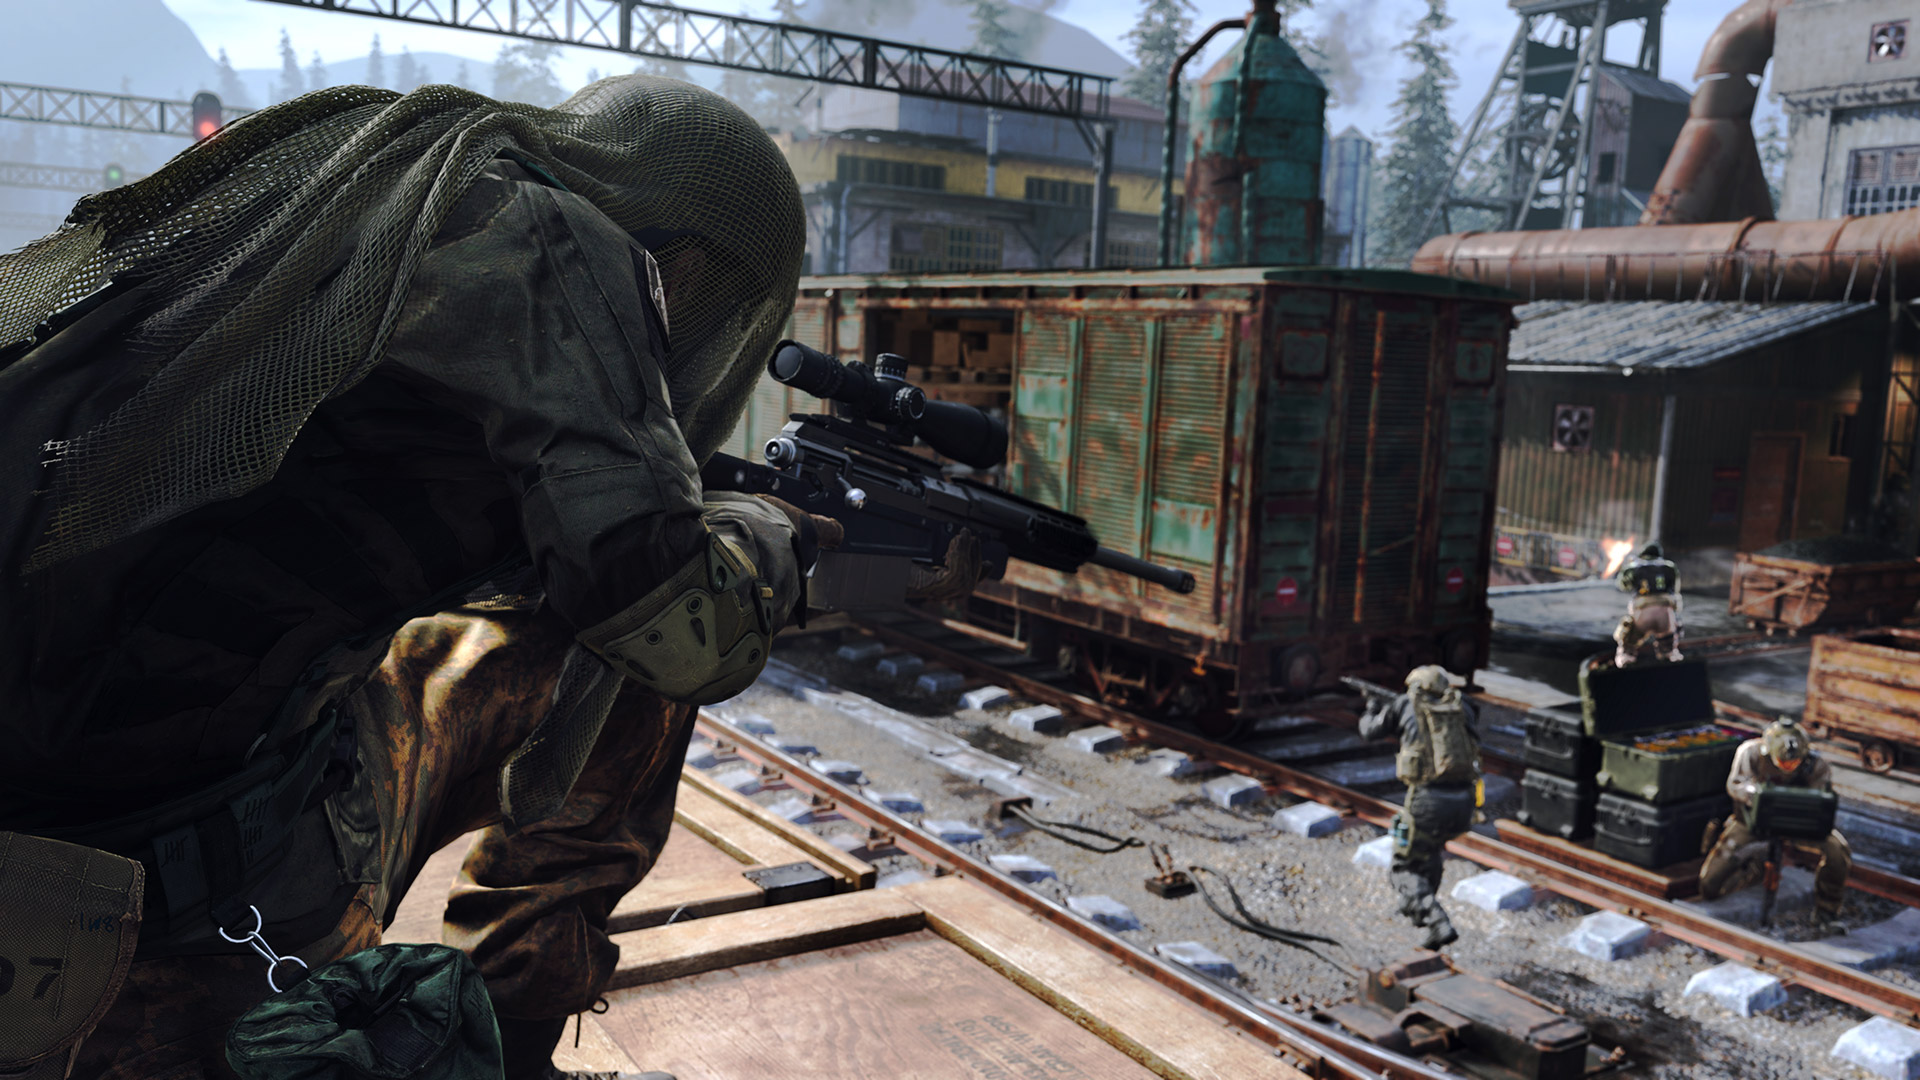 Modern Warfare 3 (PC) Open BETA Gameplay 